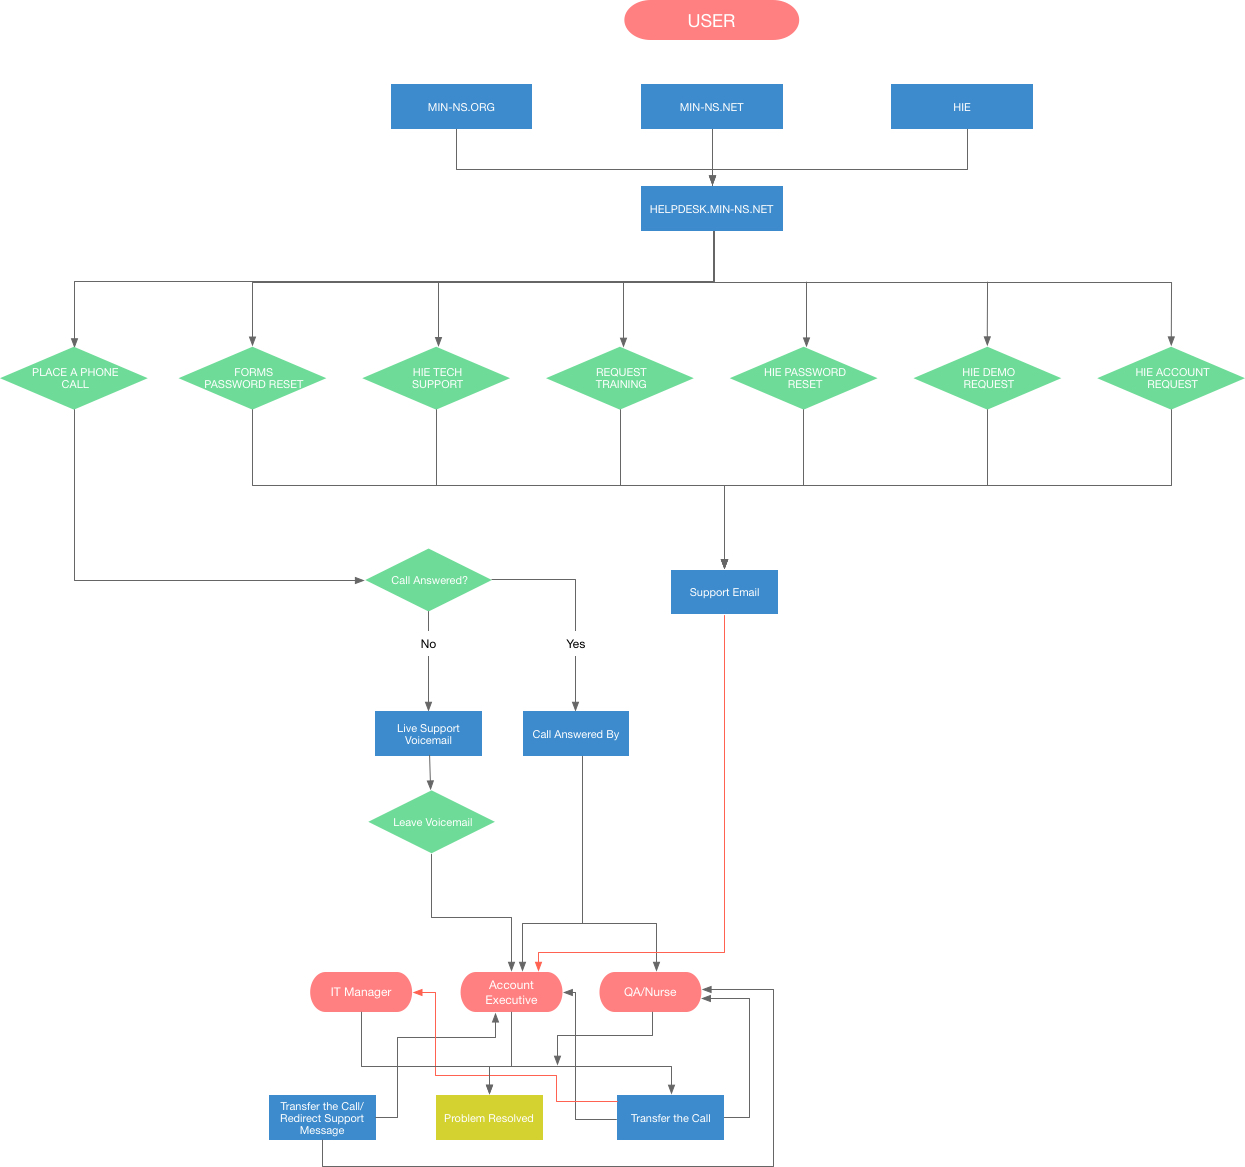 New flow diagram of helpdesk user journey